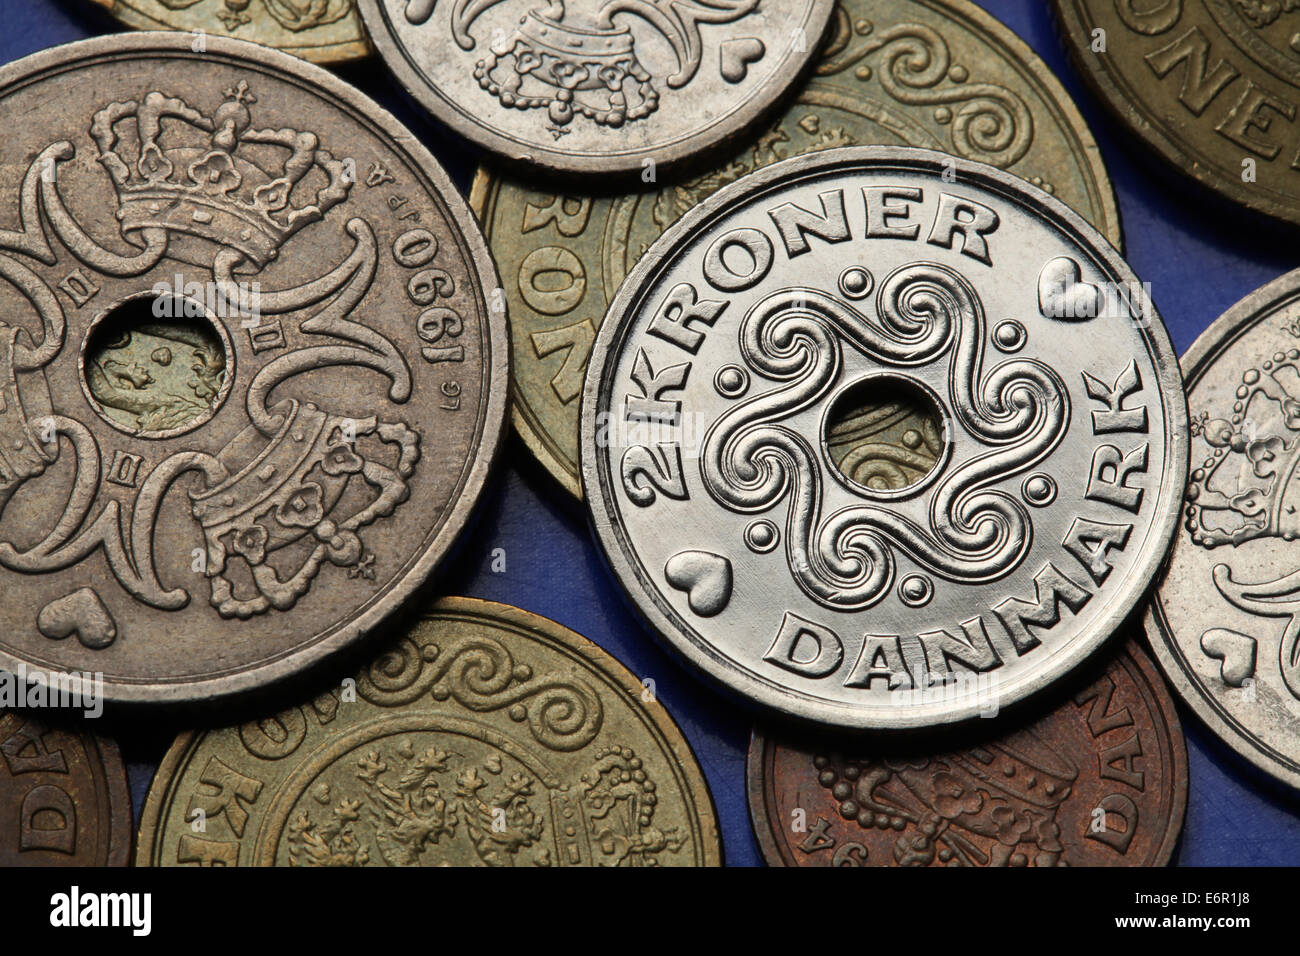 Coins of Denmark. Danish krone coins. Stock Photo